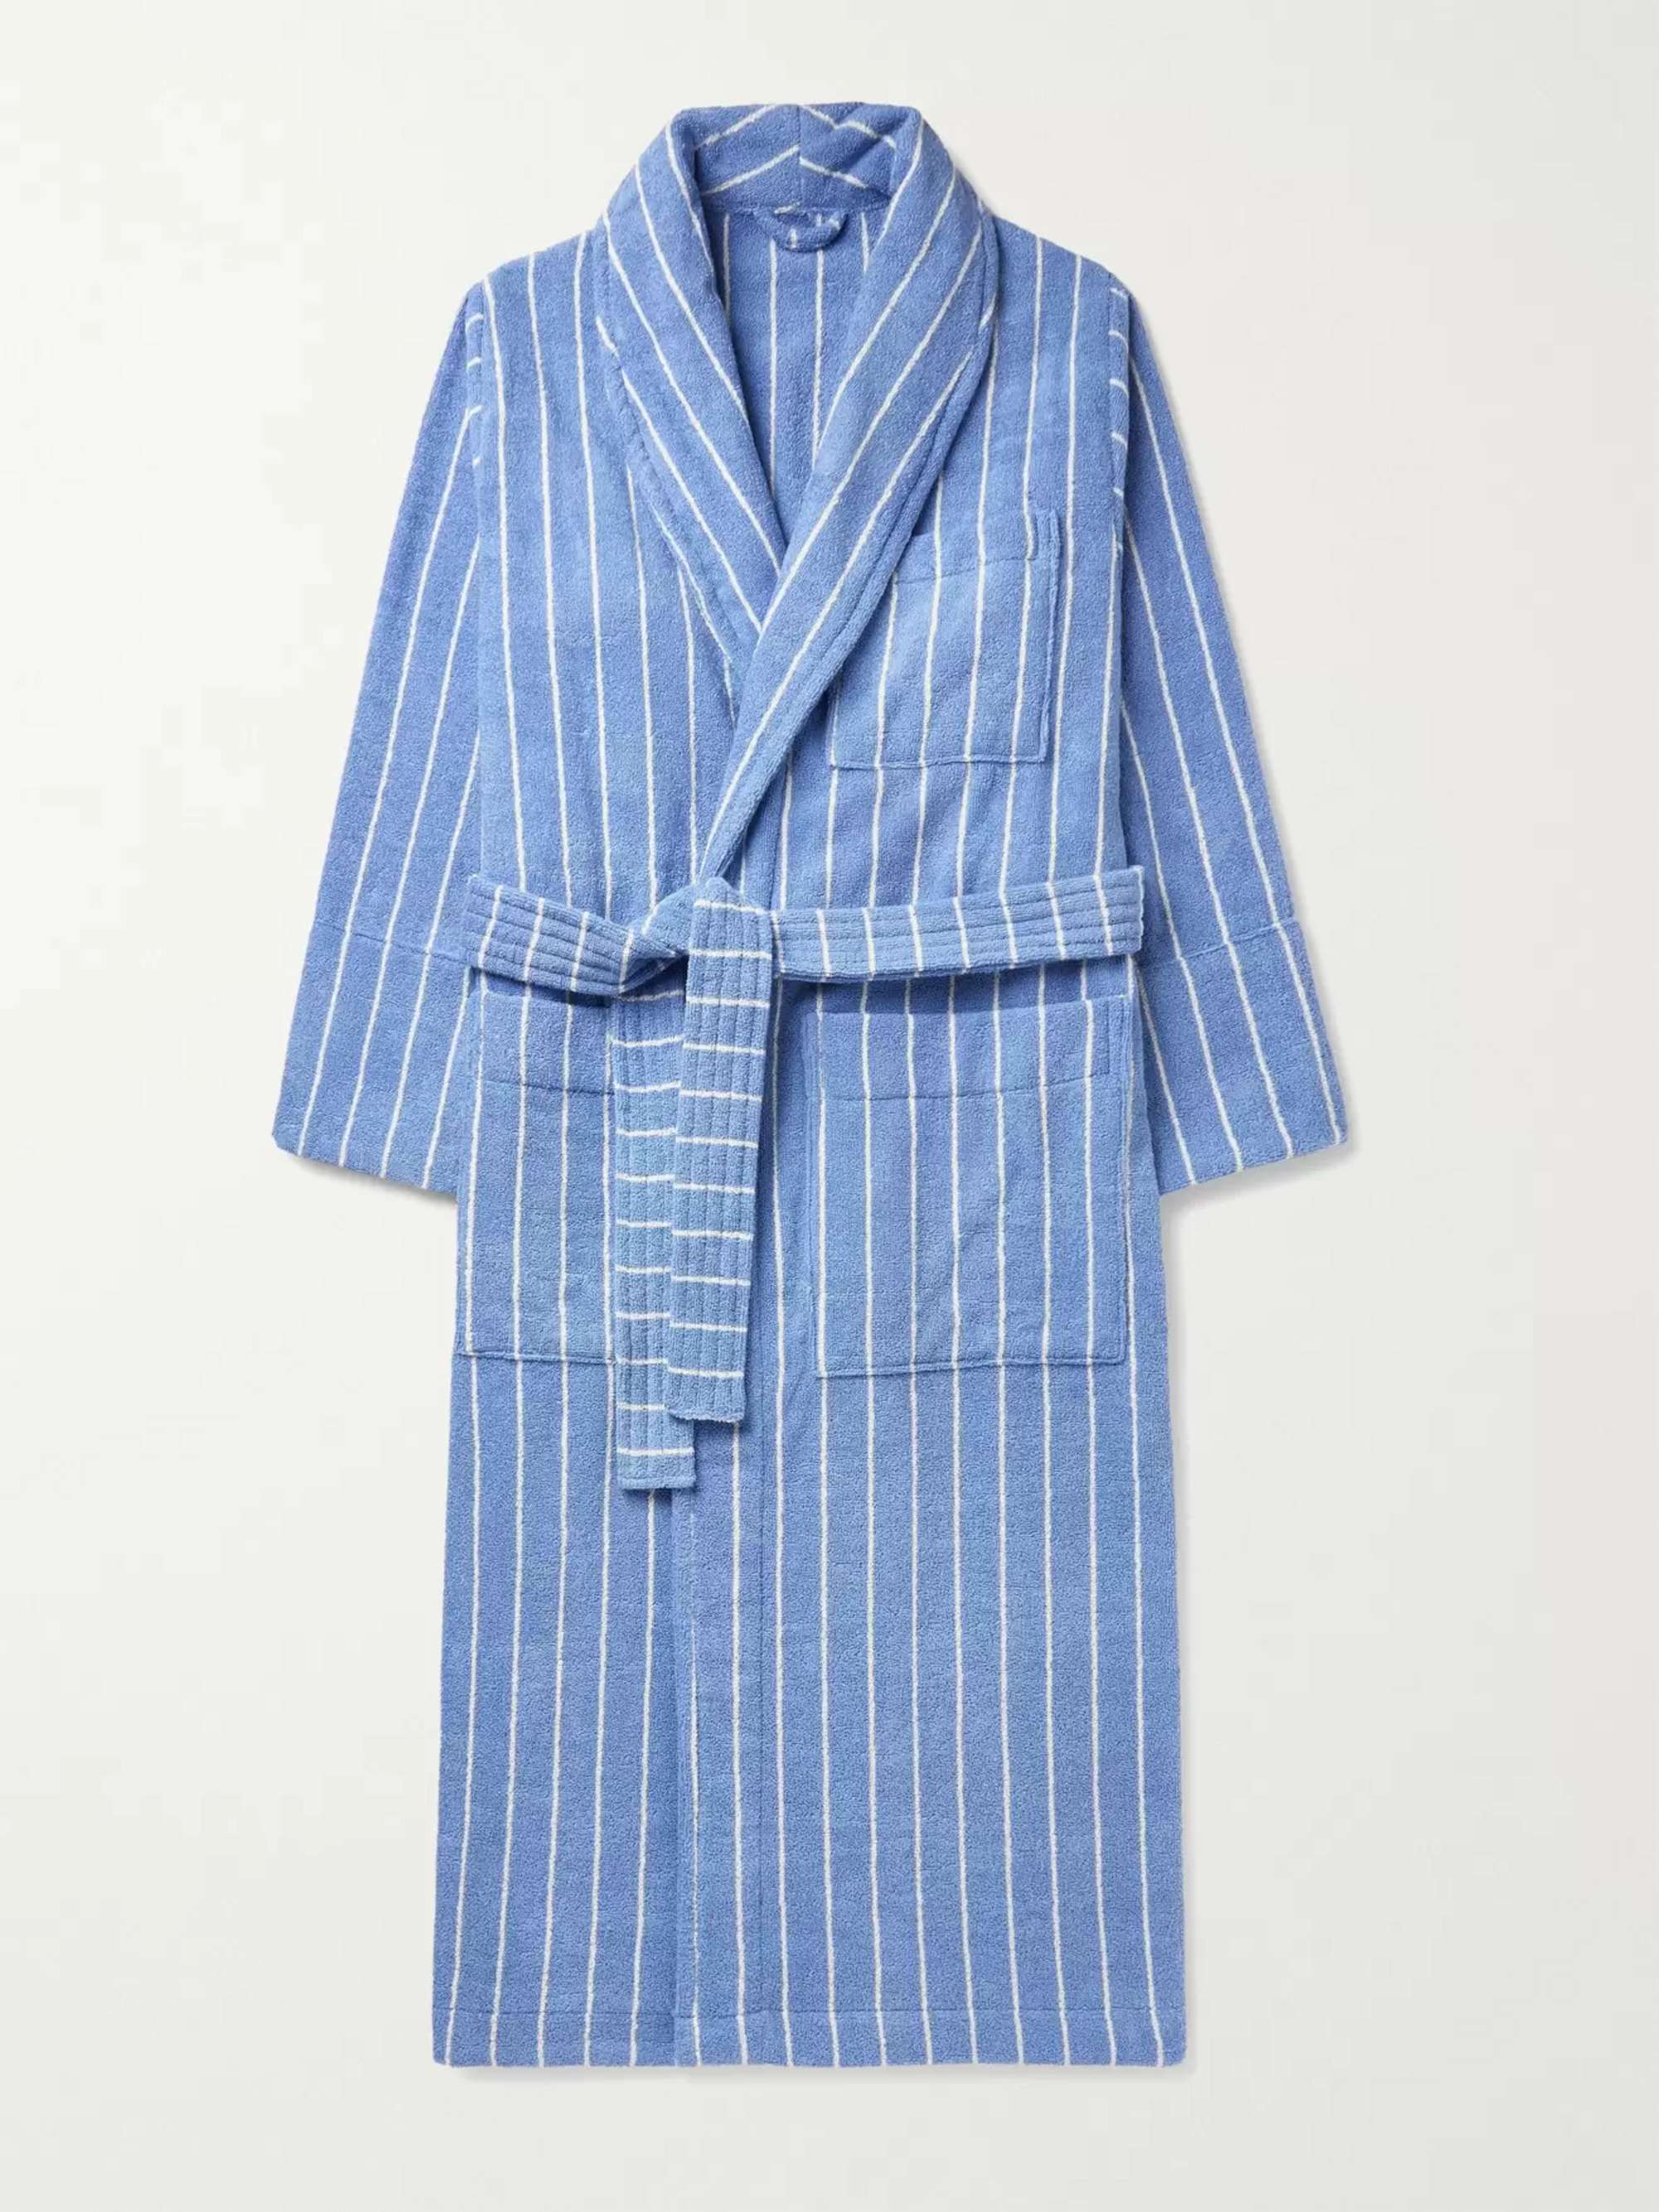 Striped Organic Cotton-Terry Robe